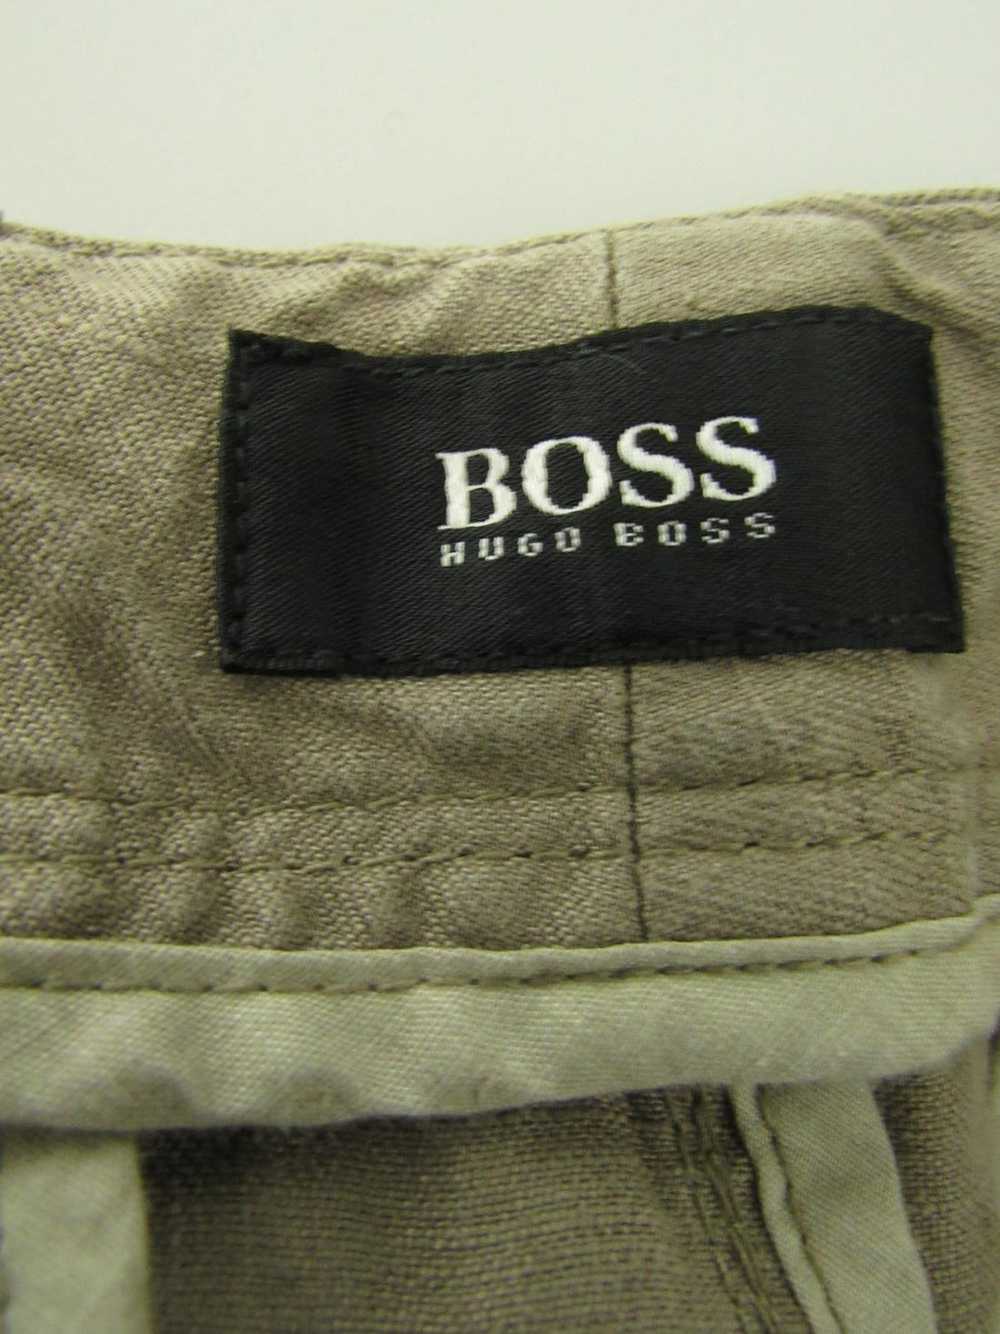 Hugo Boss Chino Pants - image 3